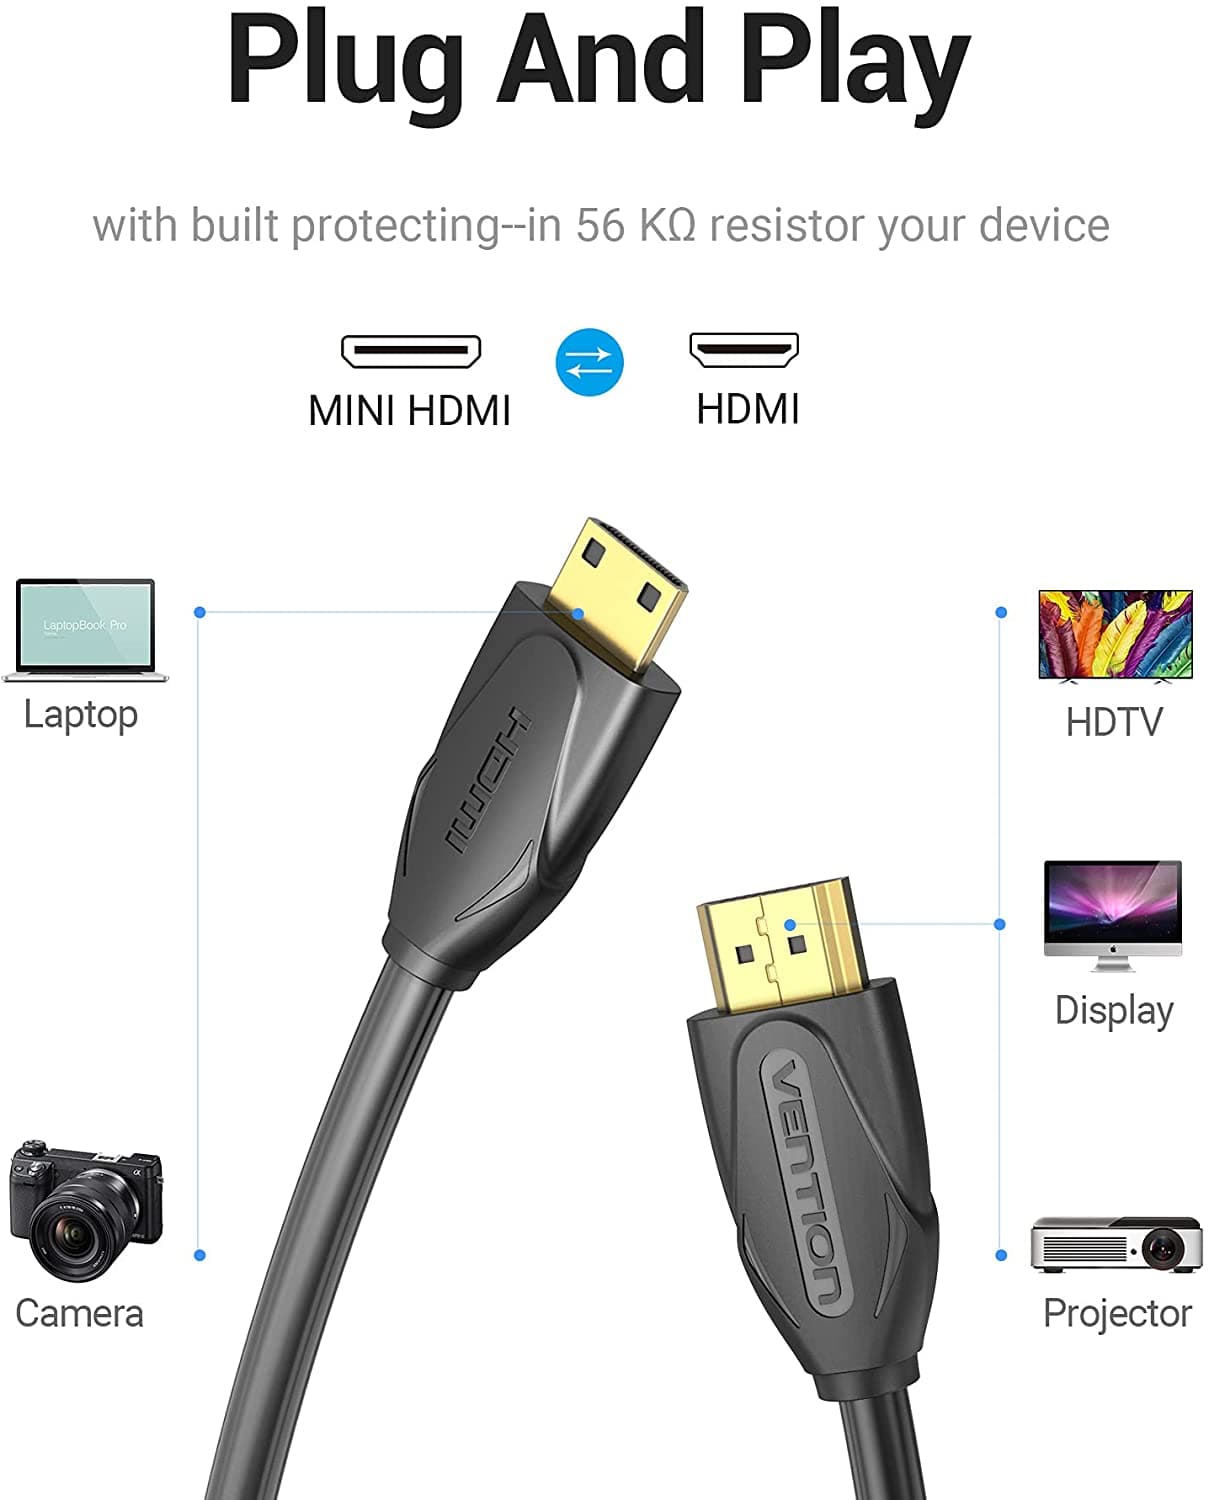 Mini HDMI Cable suitable for HDTVs, TVs, digital cameras, SLR cameras